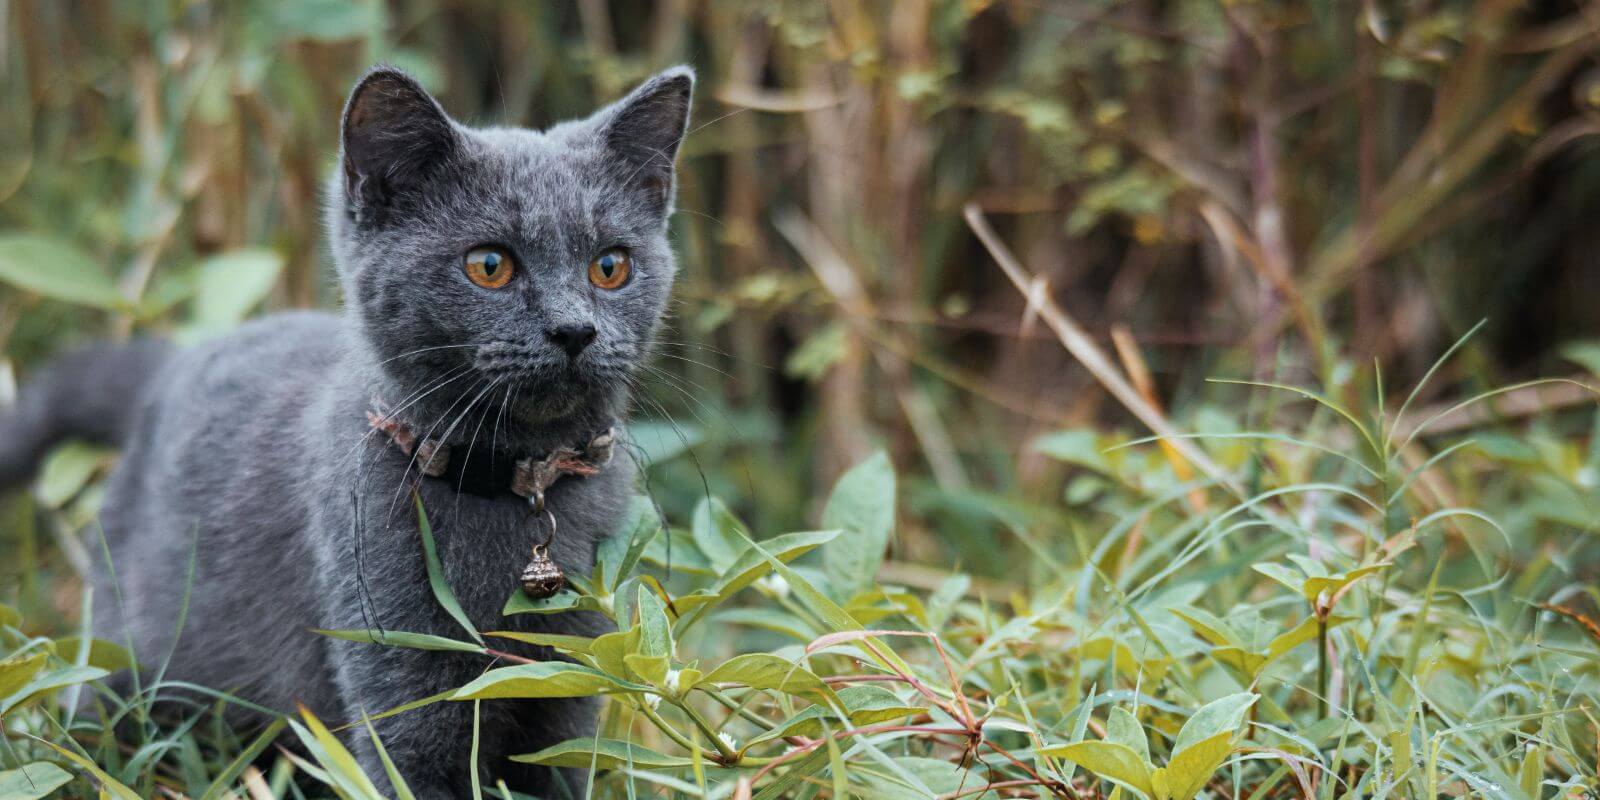 Dark grey kitten looking alert in the grass